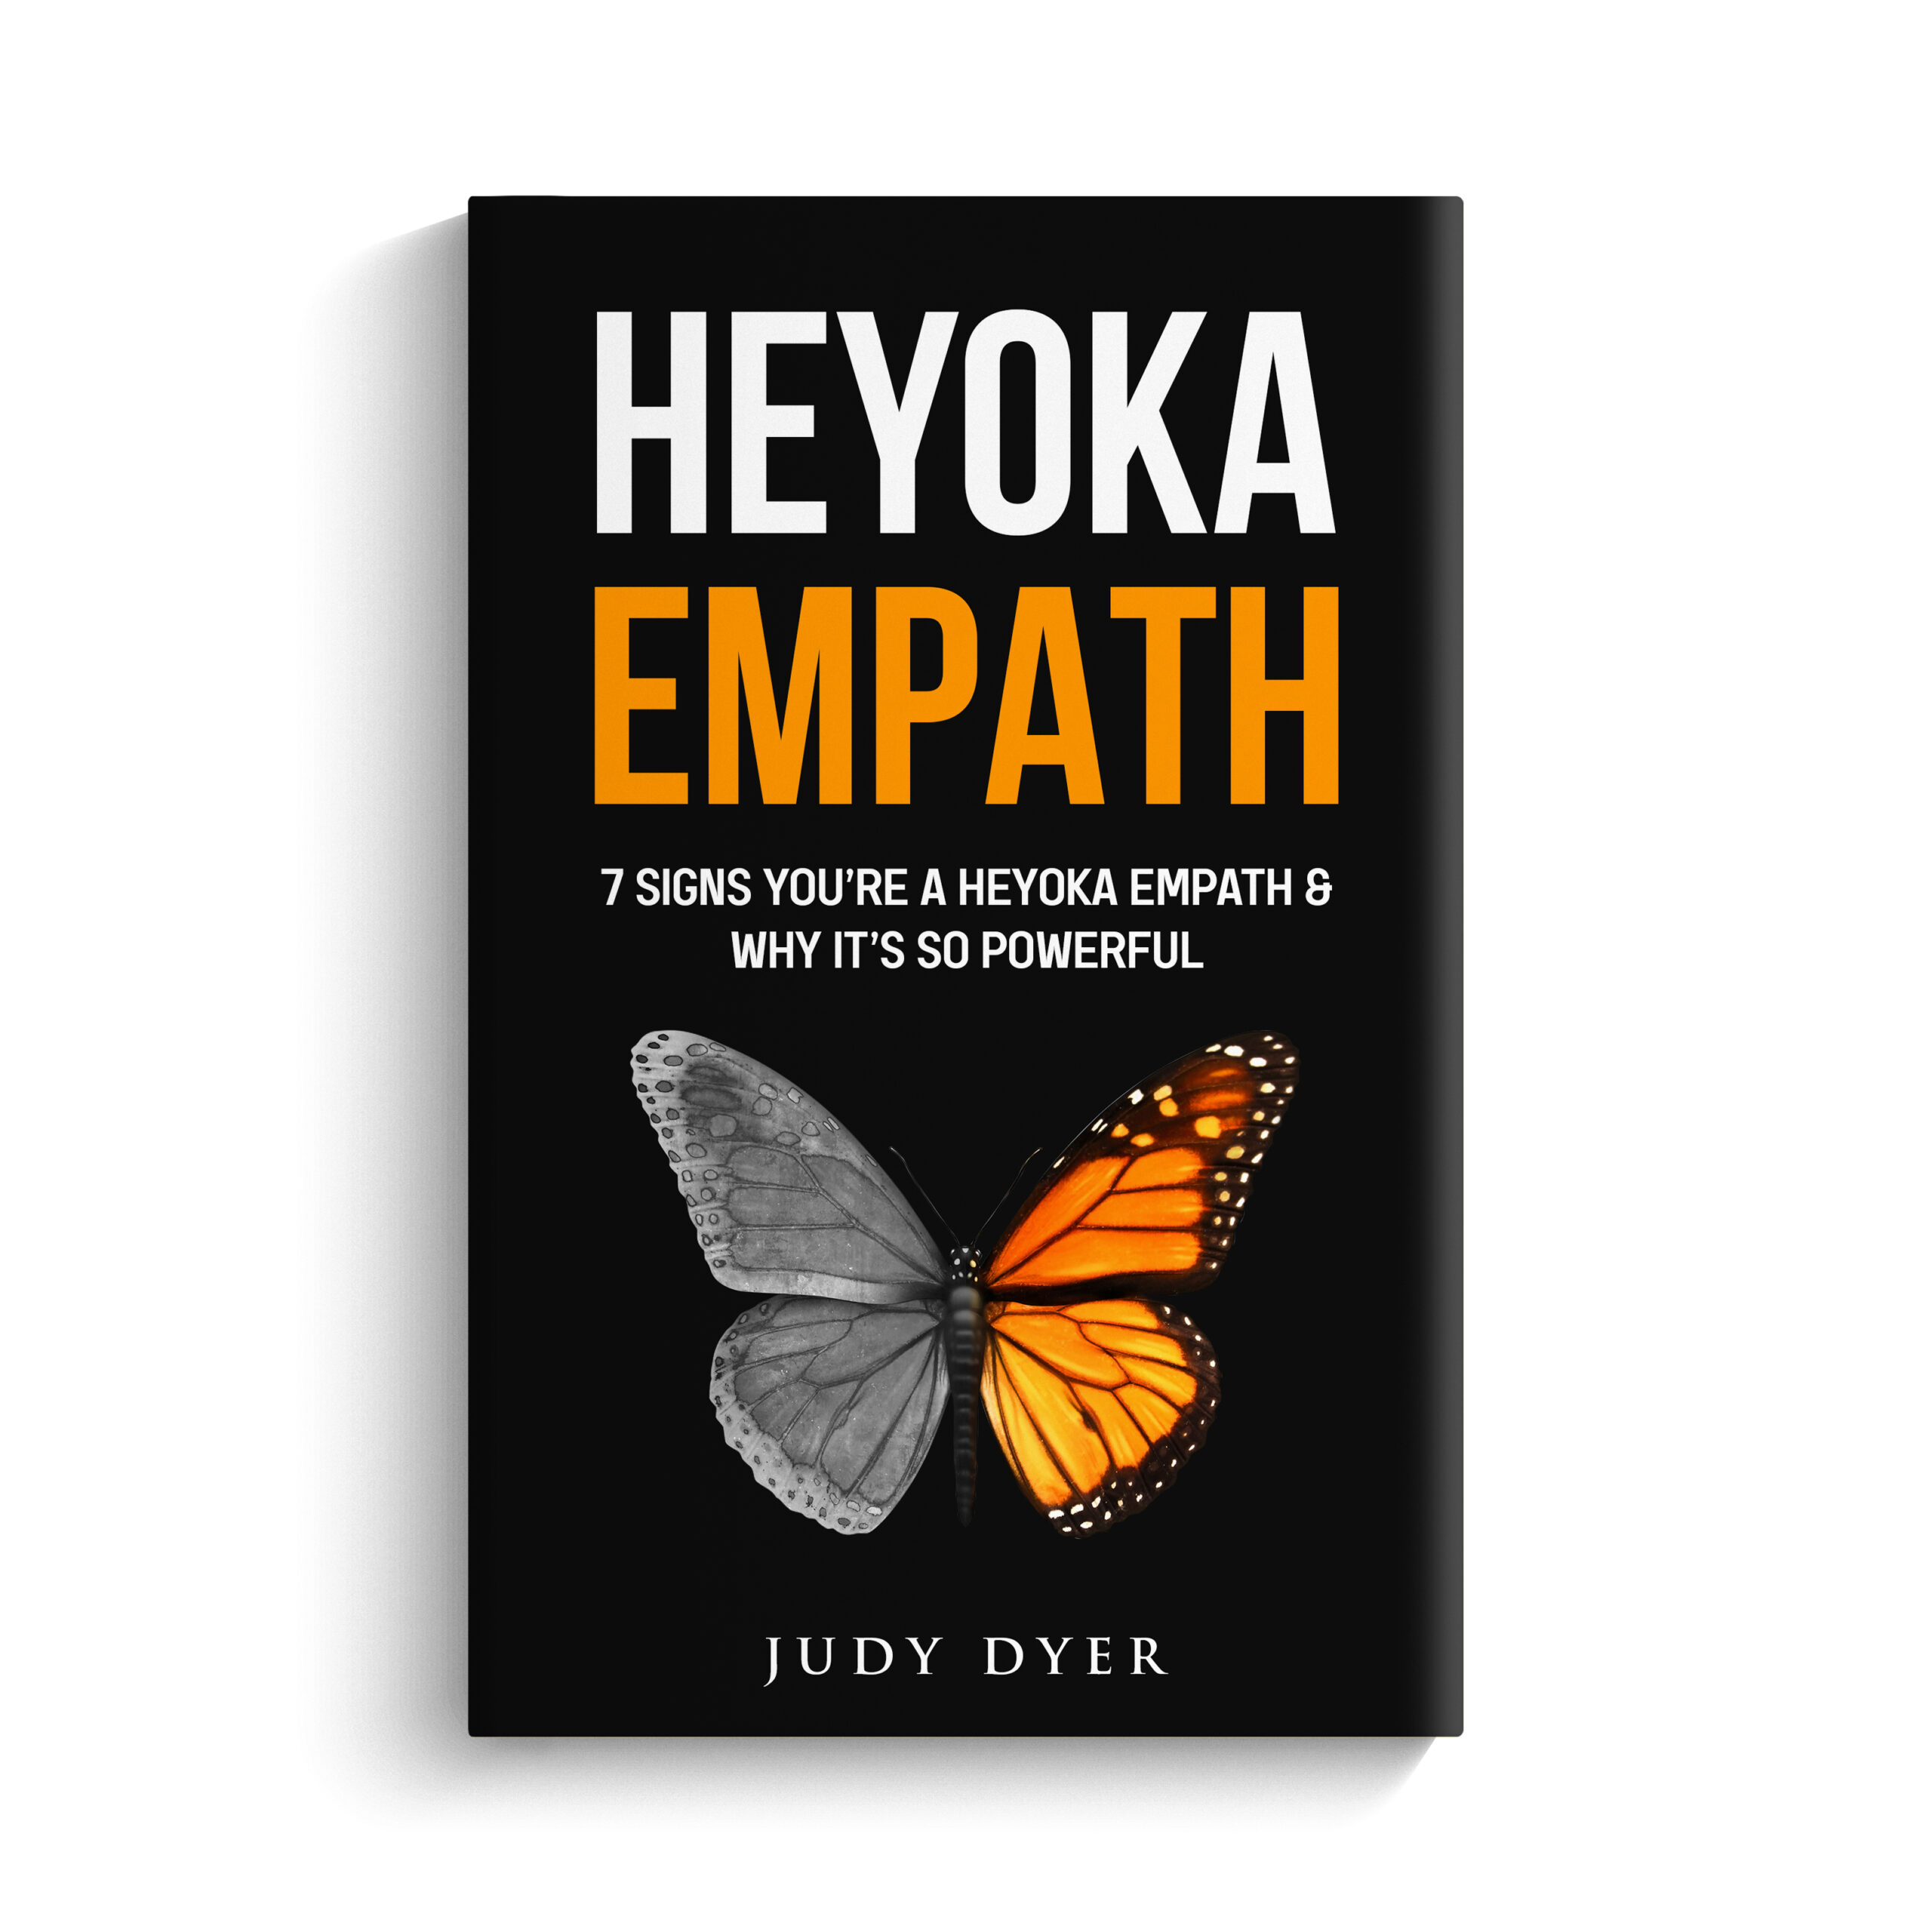 Heyoka Empath by Judy Dyer